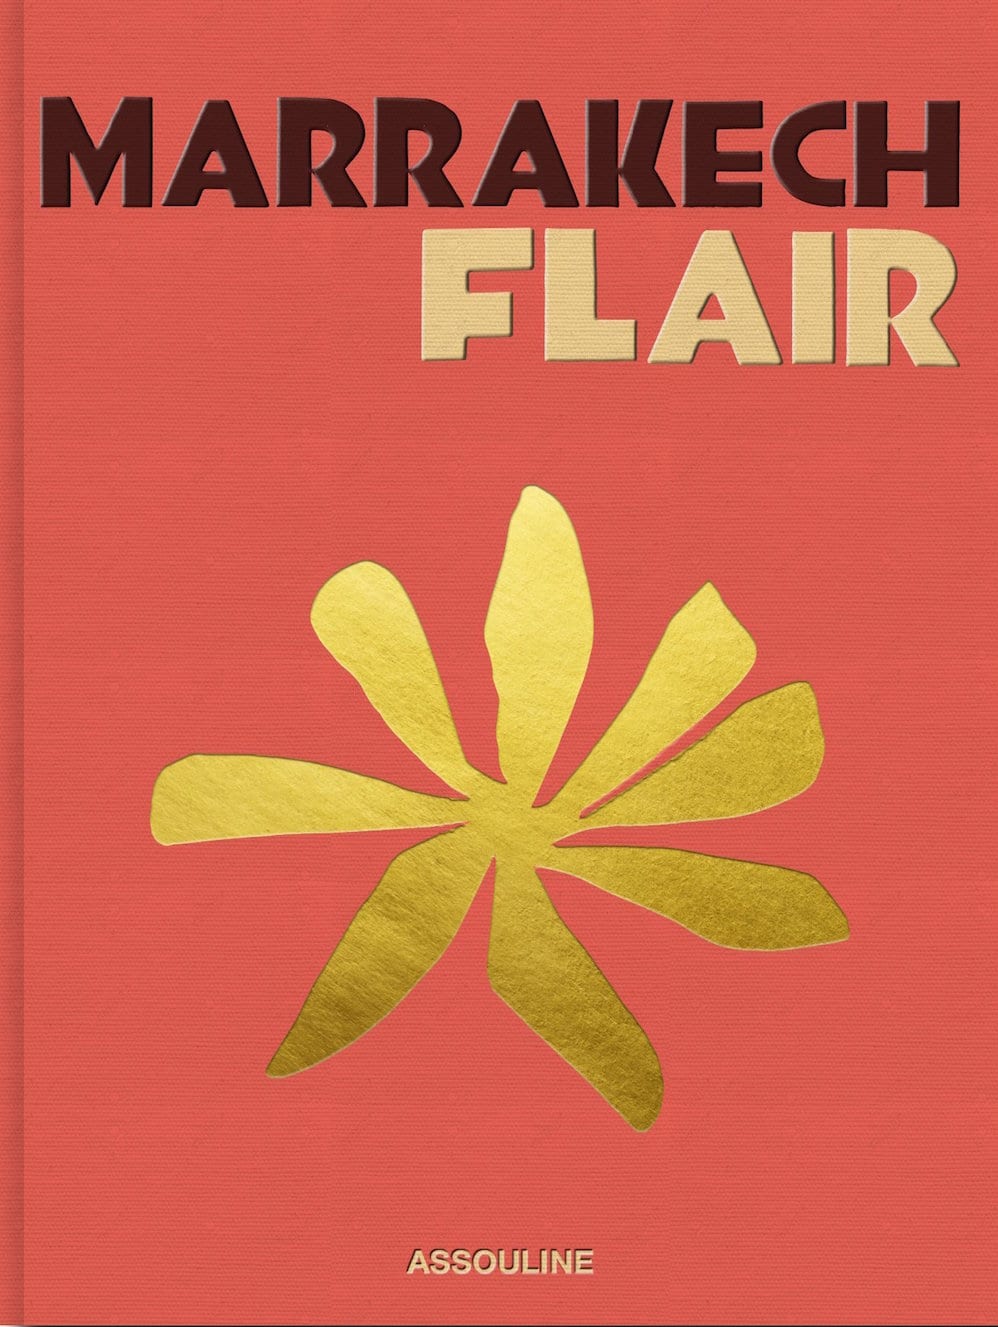 Marrakecha